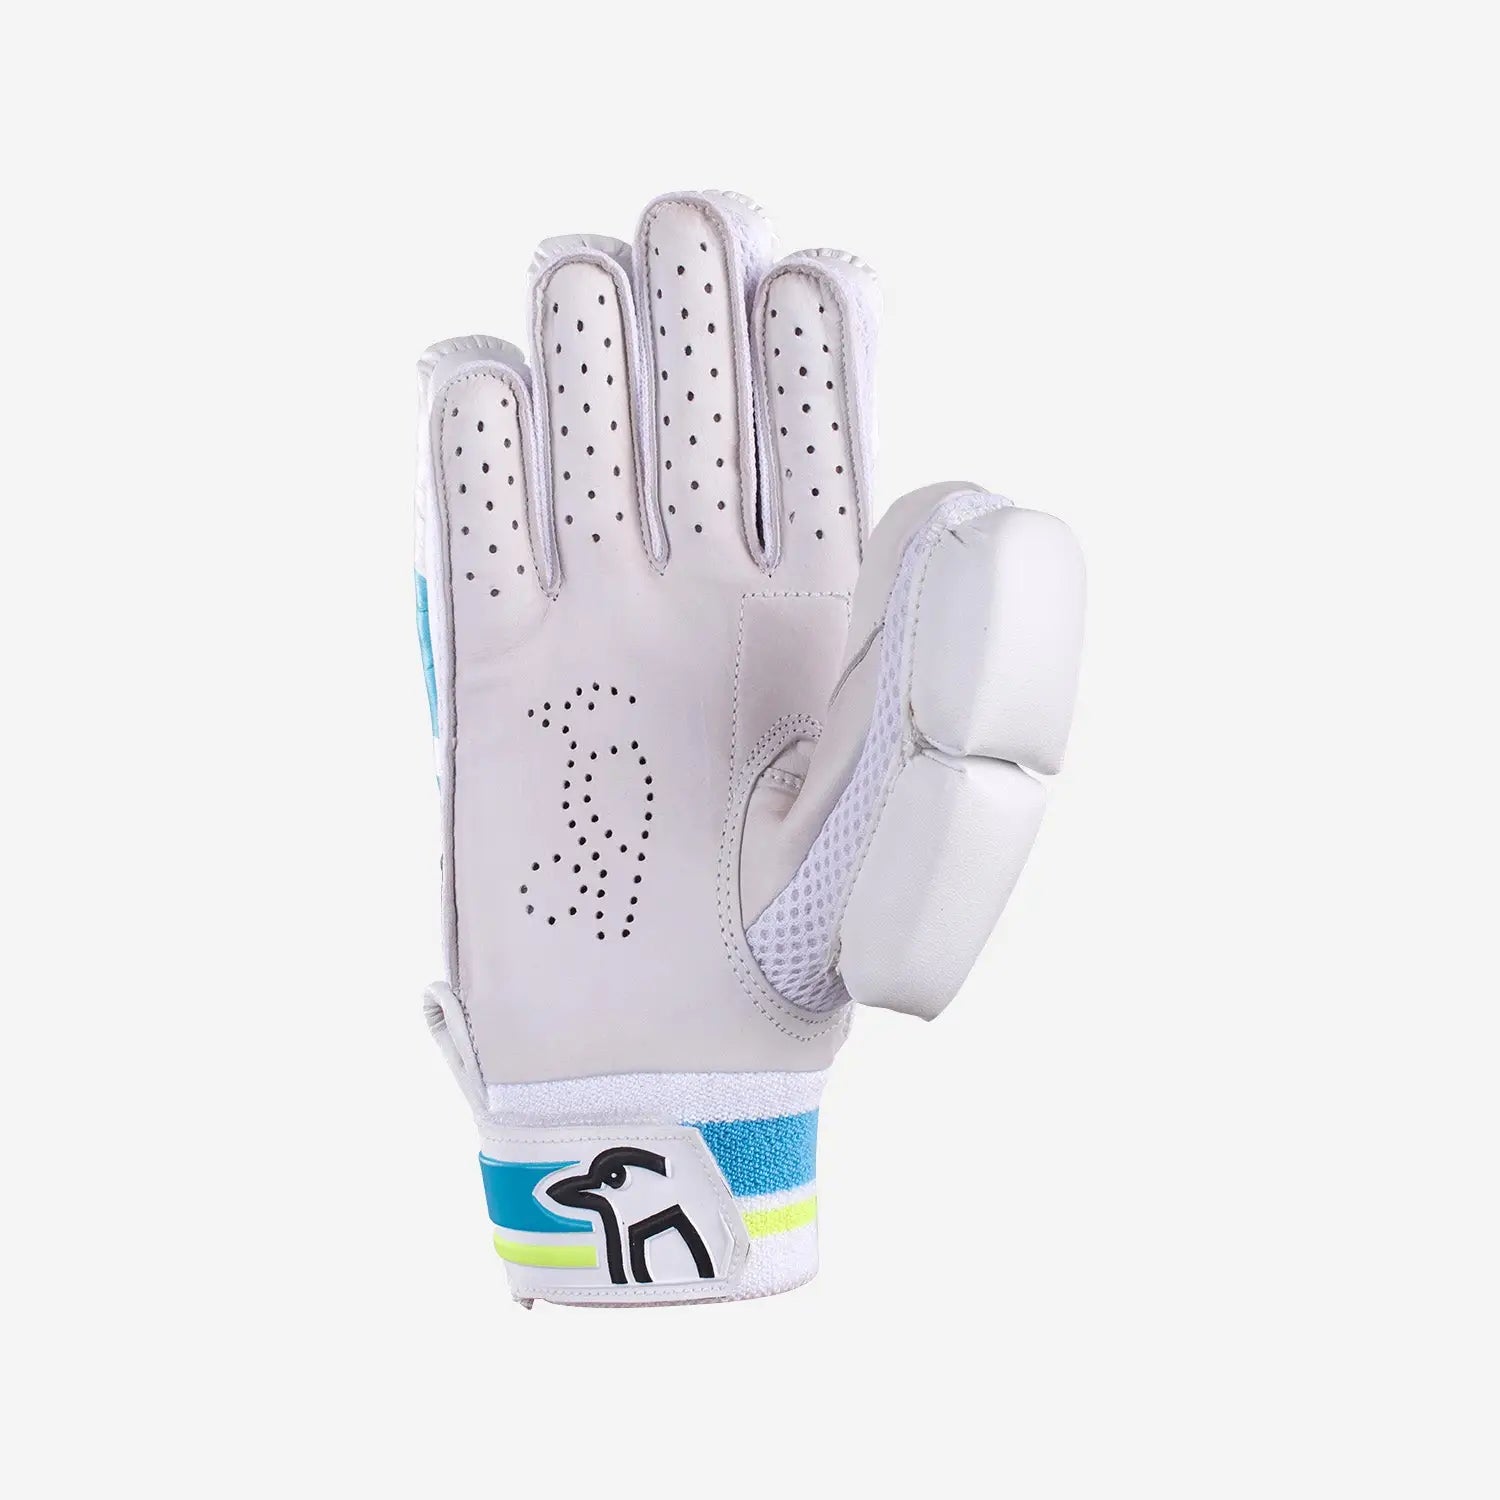 Kookaburra RAPID 4.1 Cricket Batting Gloves Comfort and Protection - GLOVE - BATTING